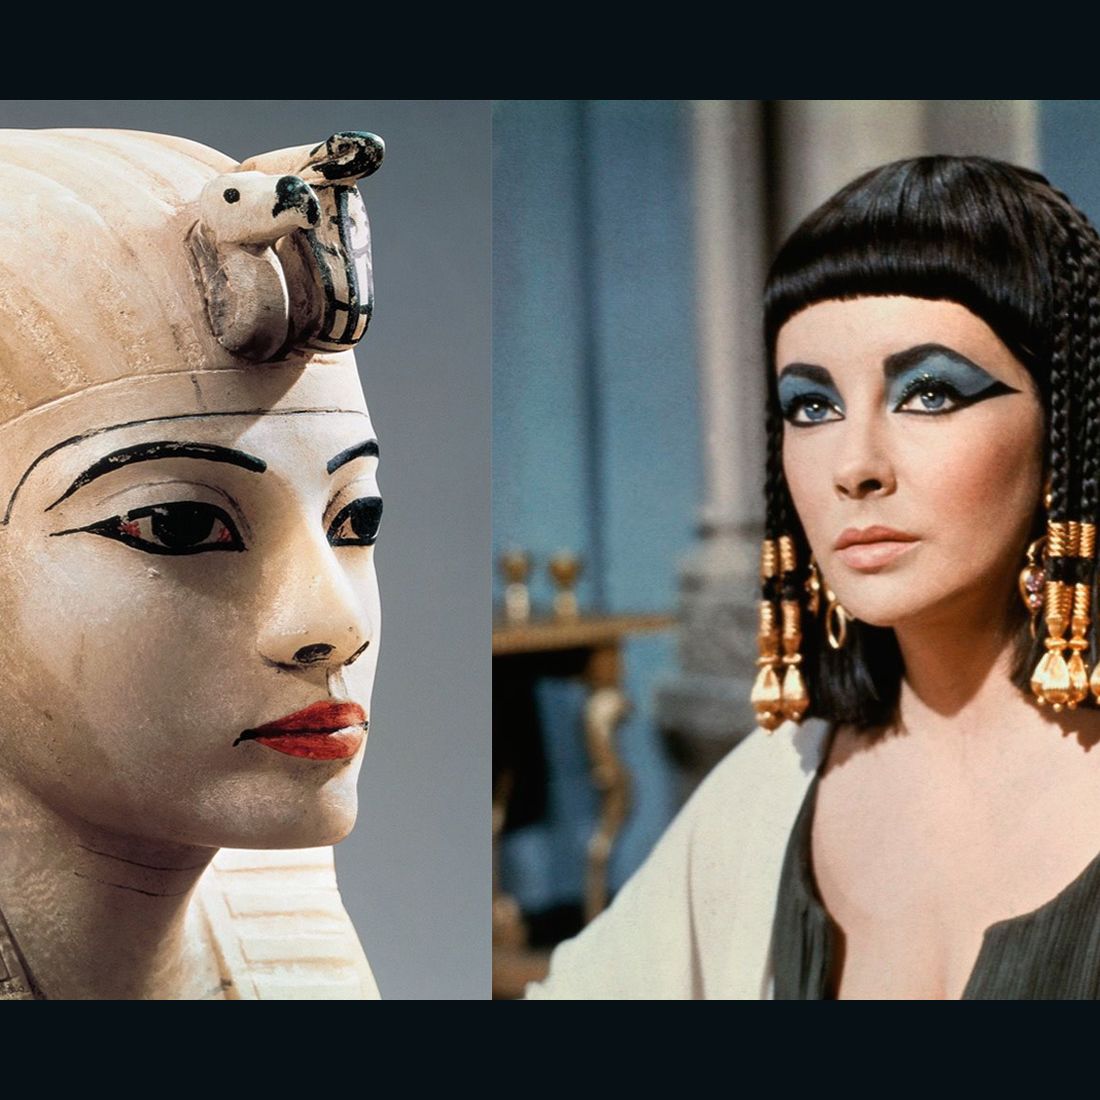 ancient Egyptian cosmetics influenced our beauty CNN